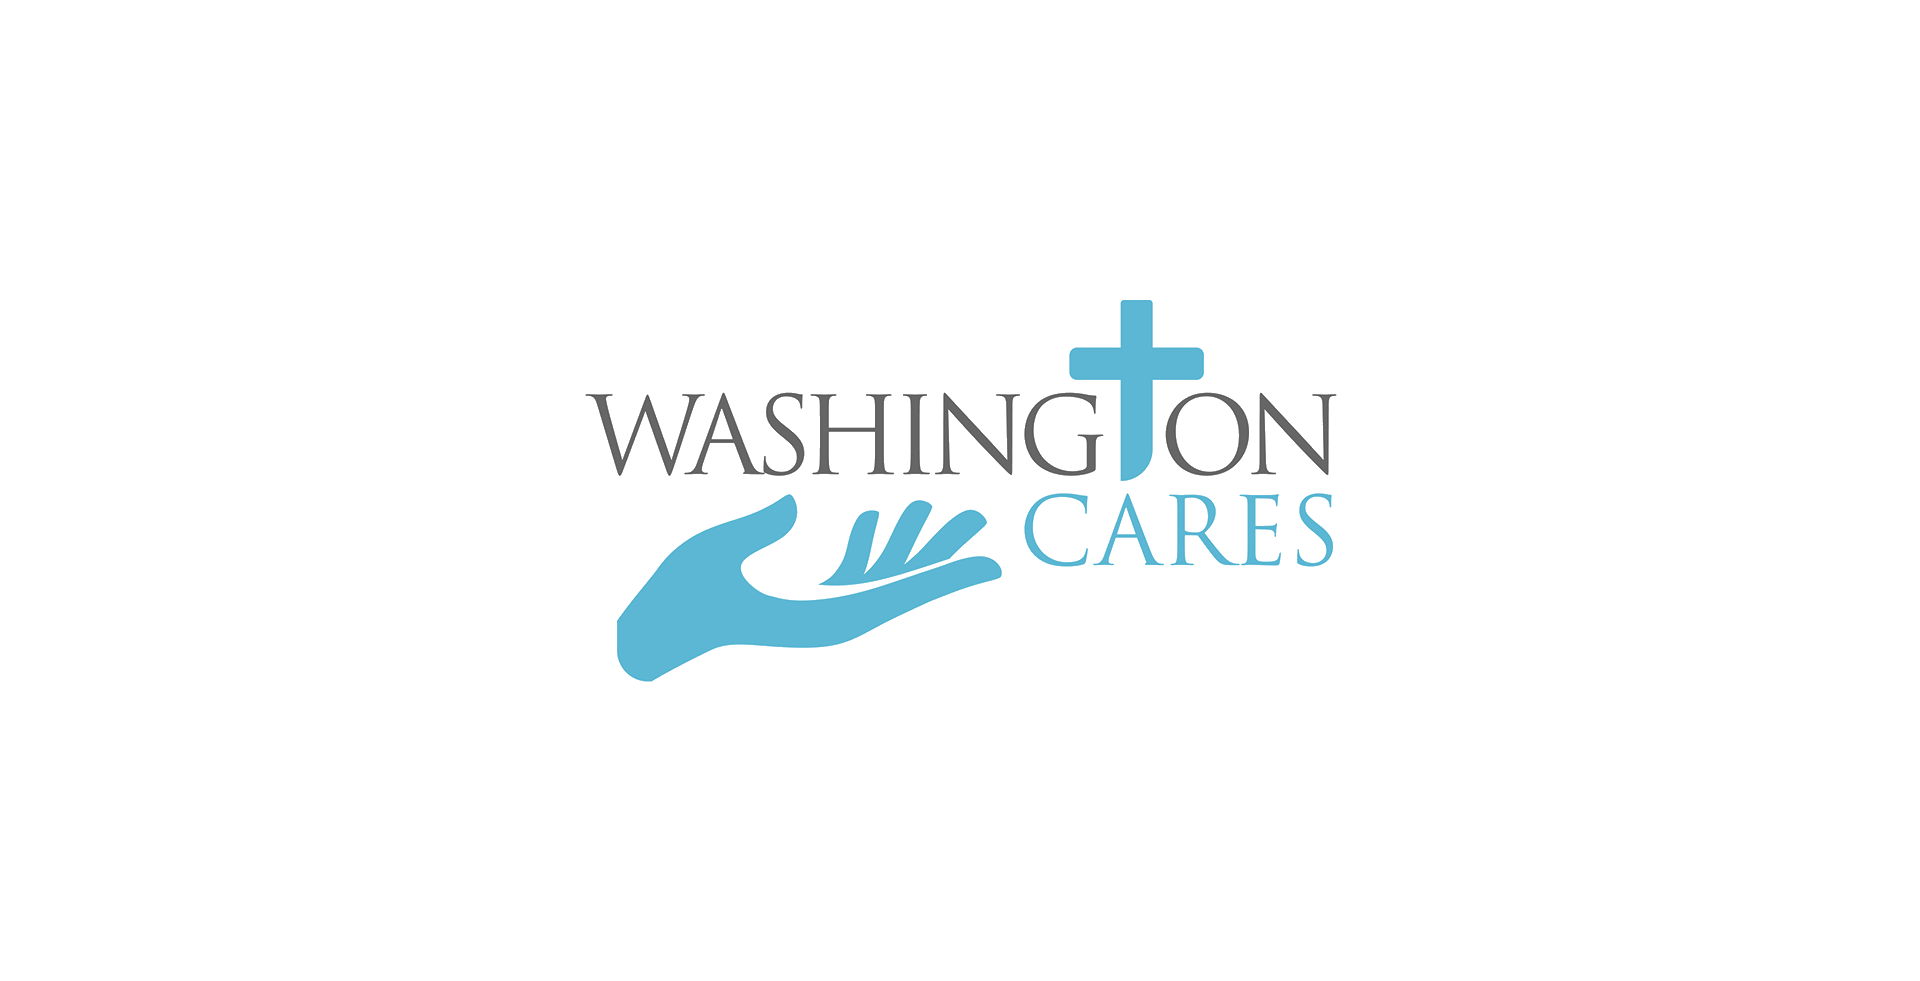 Washington Cares logo